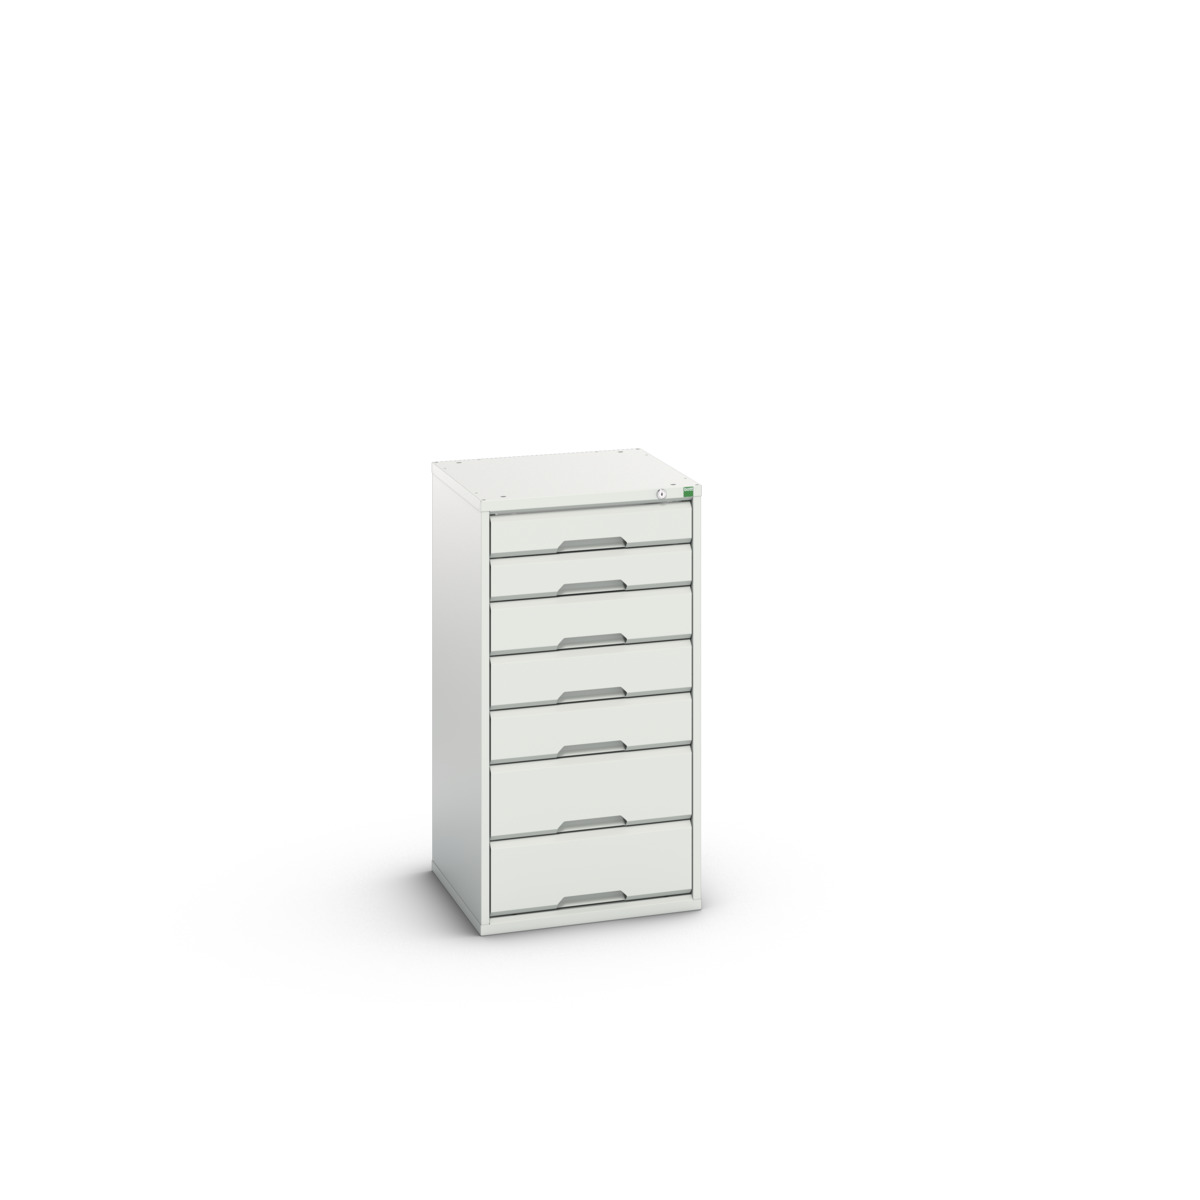 16925049.16 - verso drawer cabinet